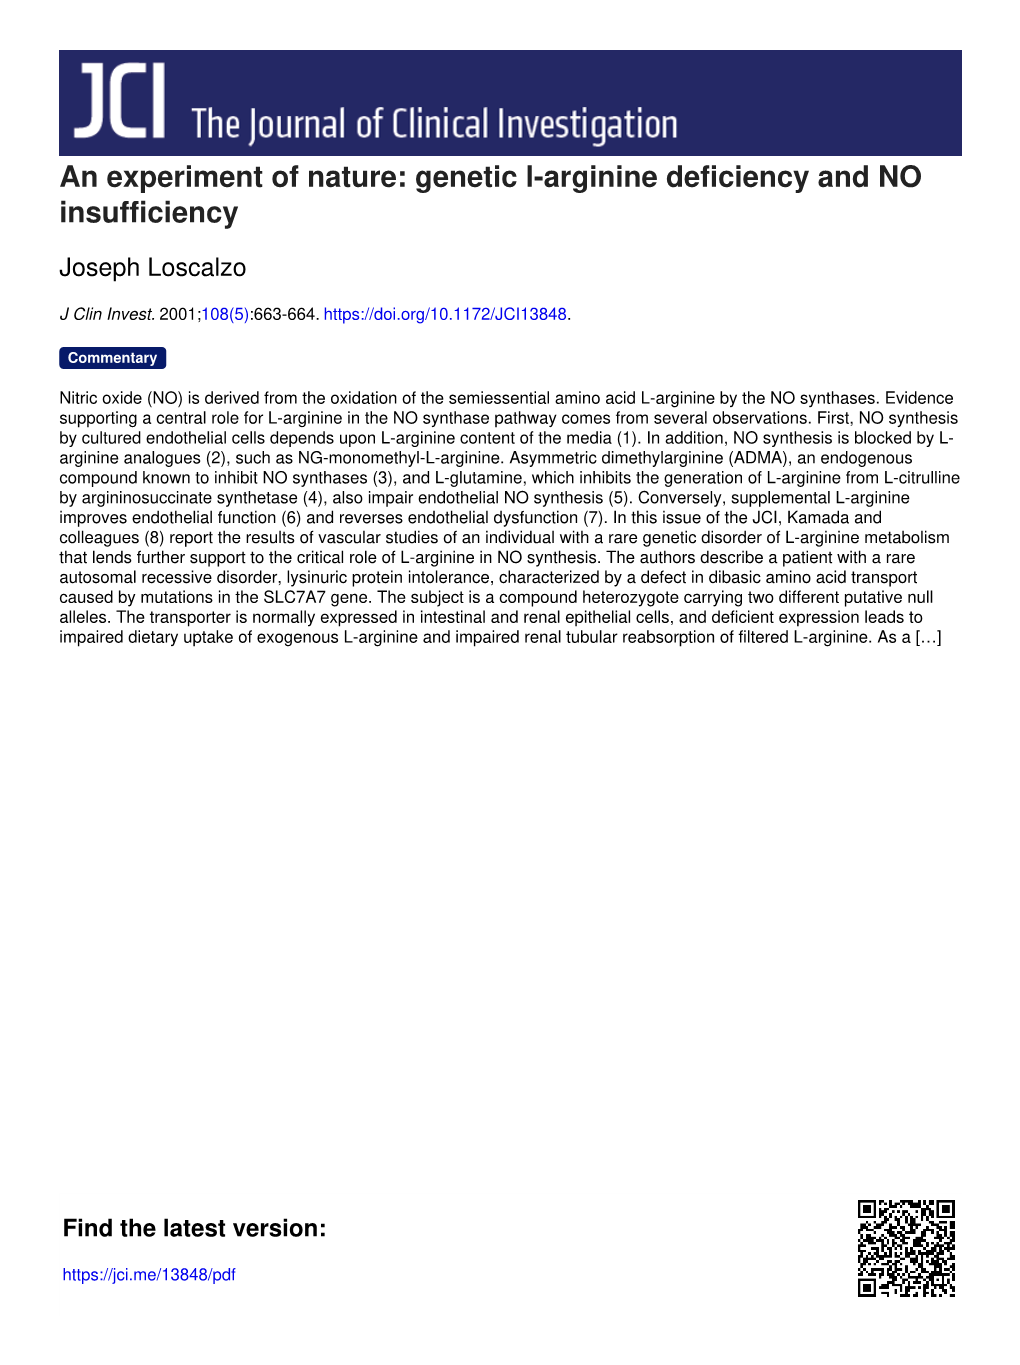 Genetic L-Arginine Deficiency and NO Insufficiency